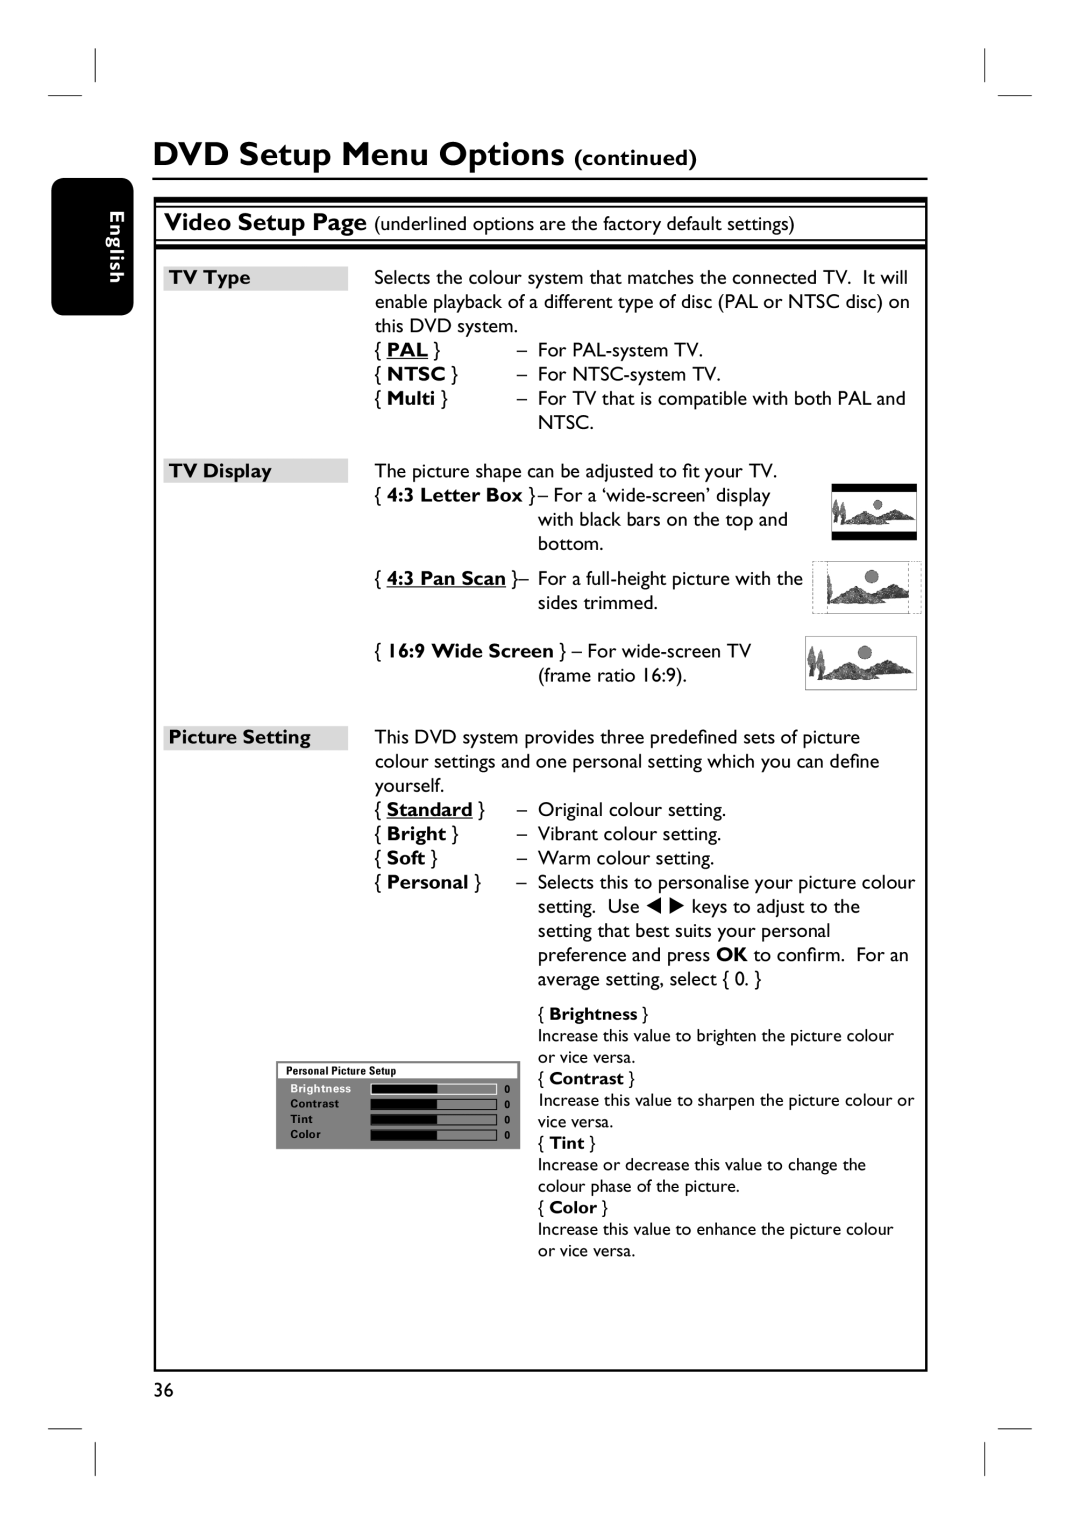 Philips HTS3115 user manual TV Type, TV Display, 4:3 Pan Scan, Soft, DVD Setup Menu Options continued, English, Ntsc, Multi 